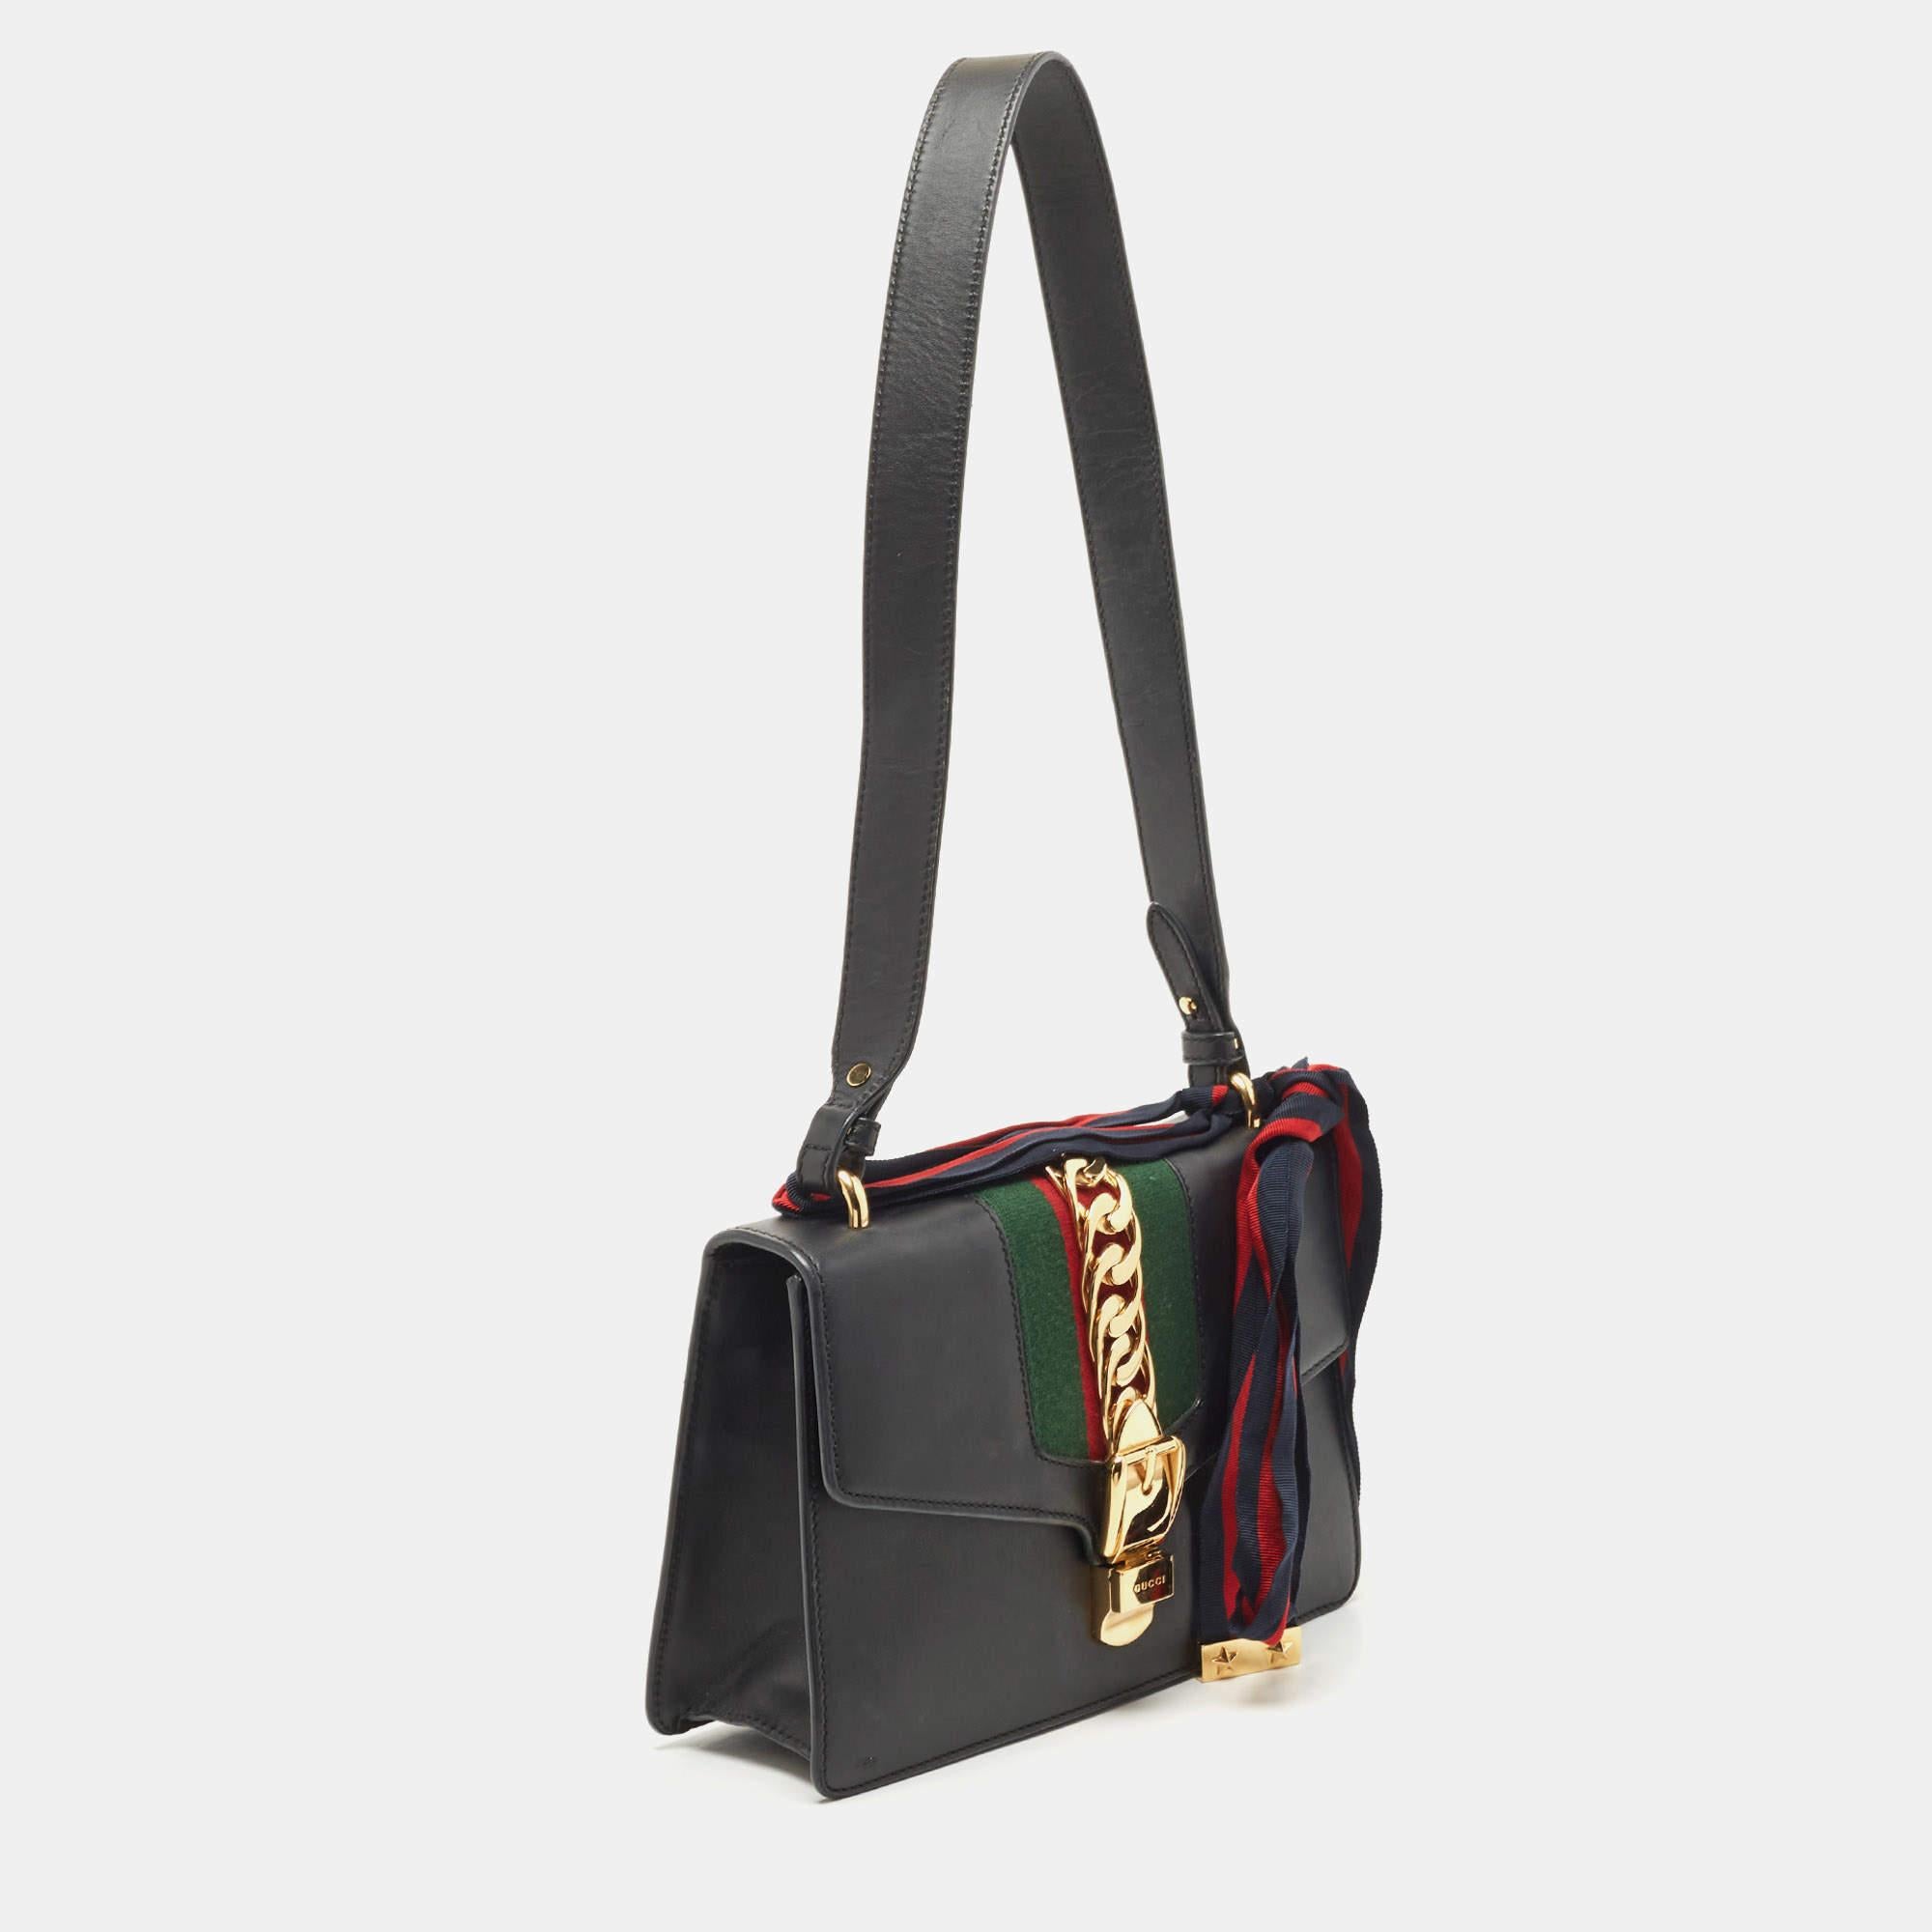 Gucci Black Leather Small Web Sylvie Shoulder Bag In Good Condition For Sale In Dubai, Al Qouz 2